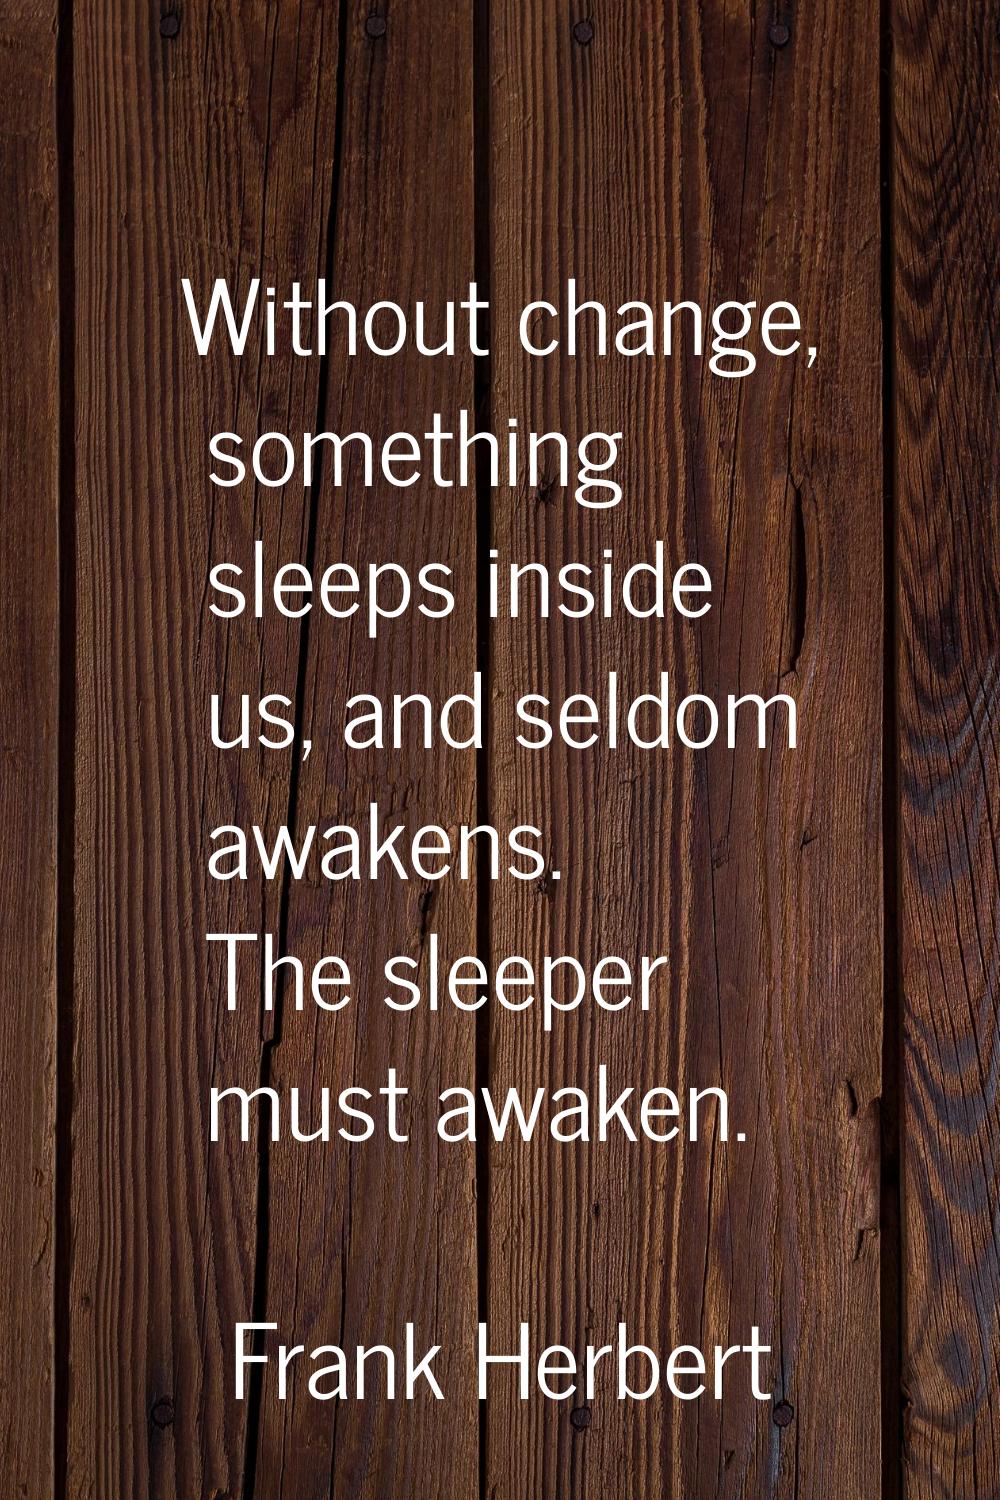 Without change, something sleeps inside us, and seldom awakens. The sleeper must awaken.